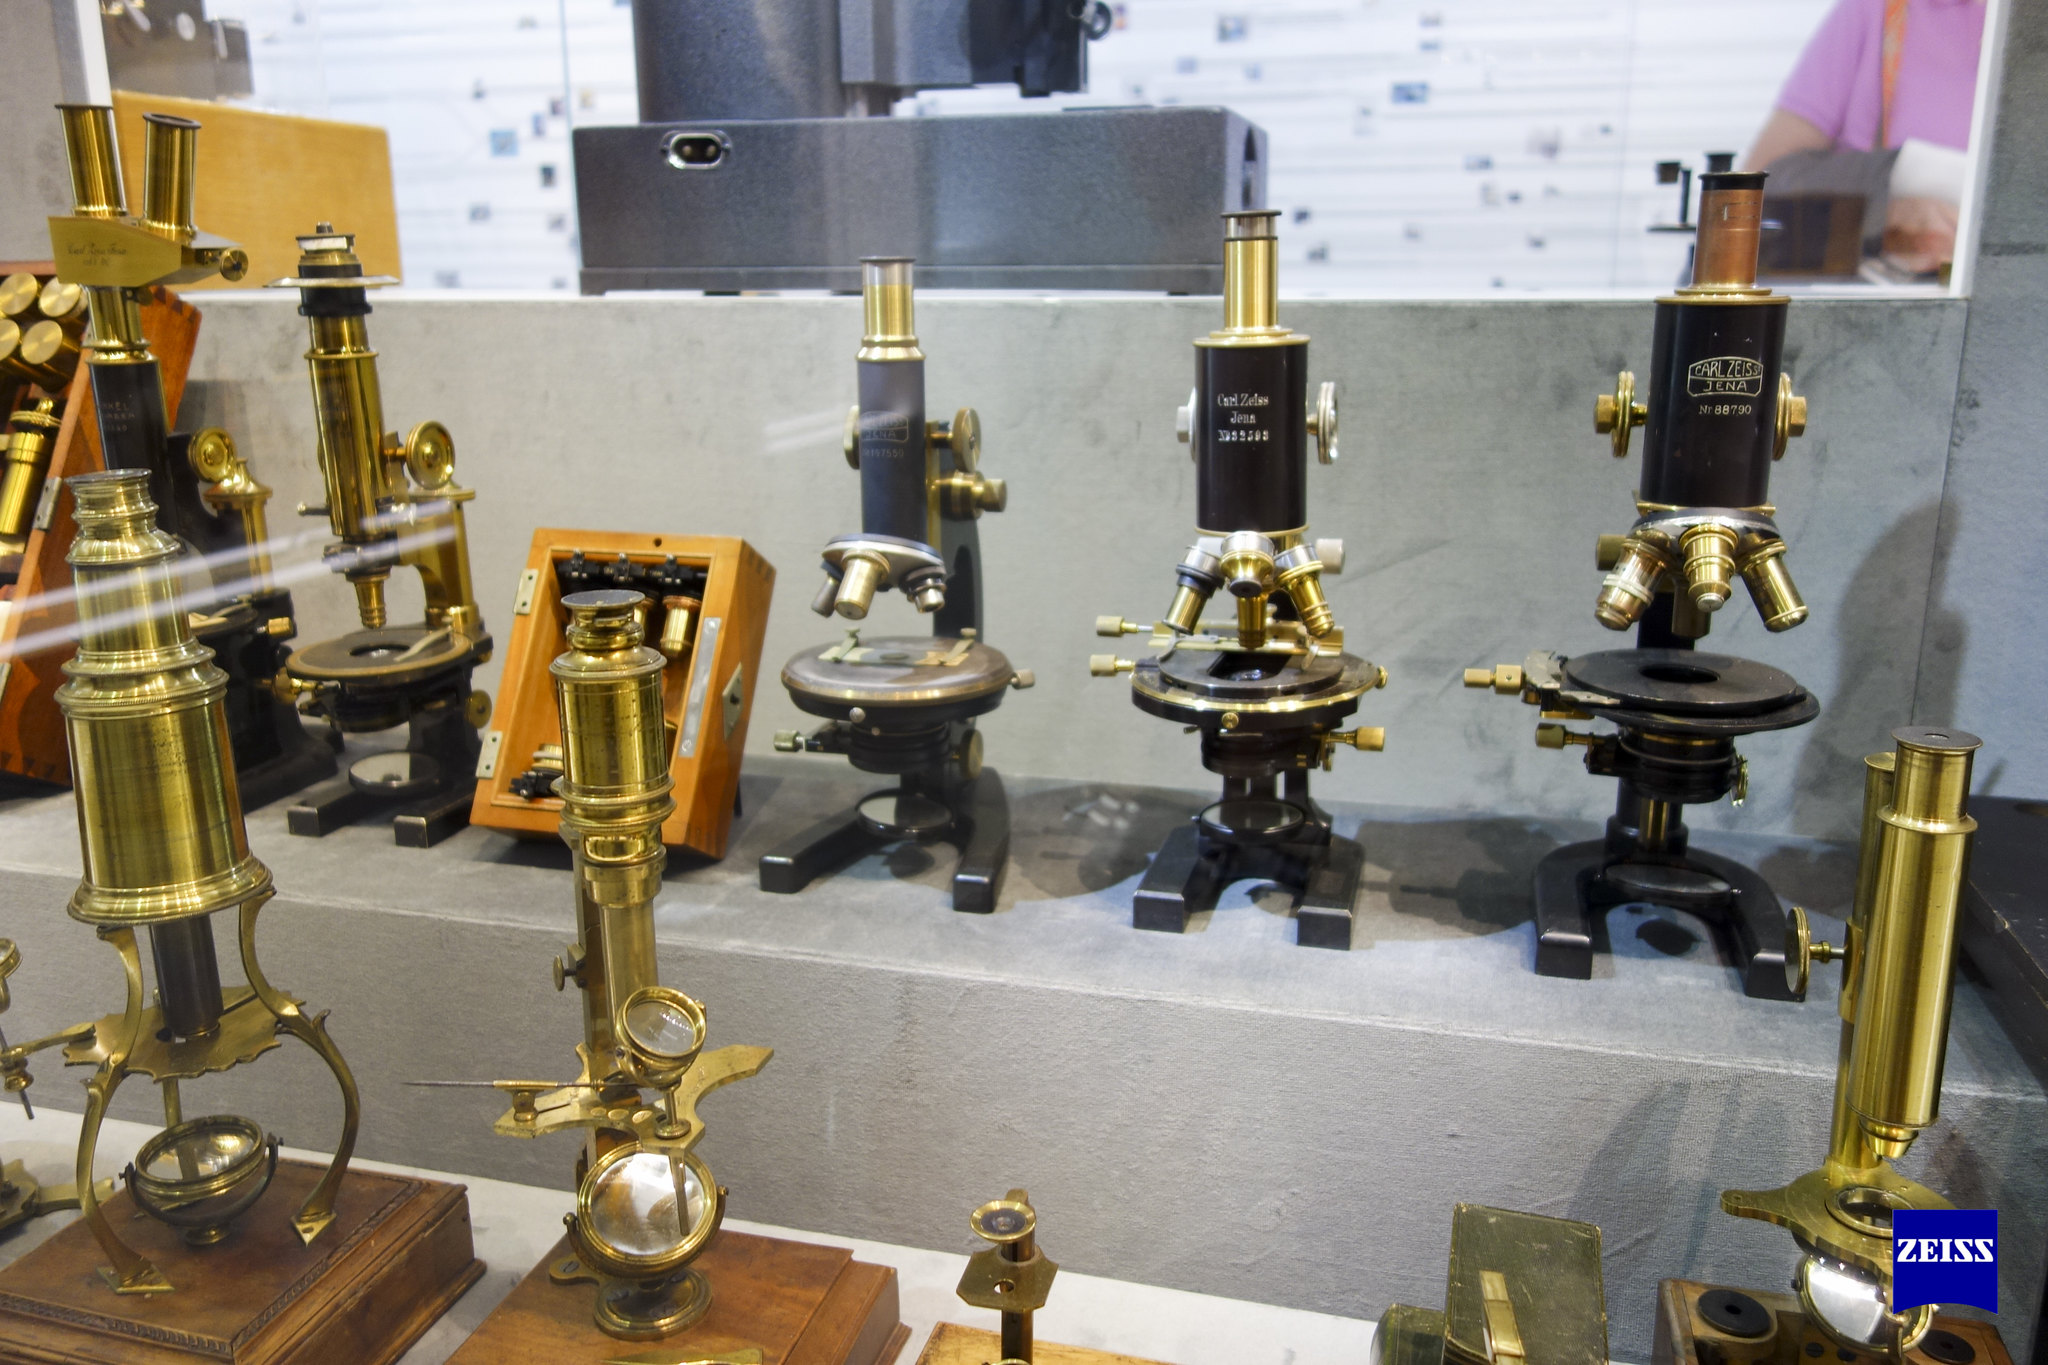 Telescopes inside the Zeiss museum of optics